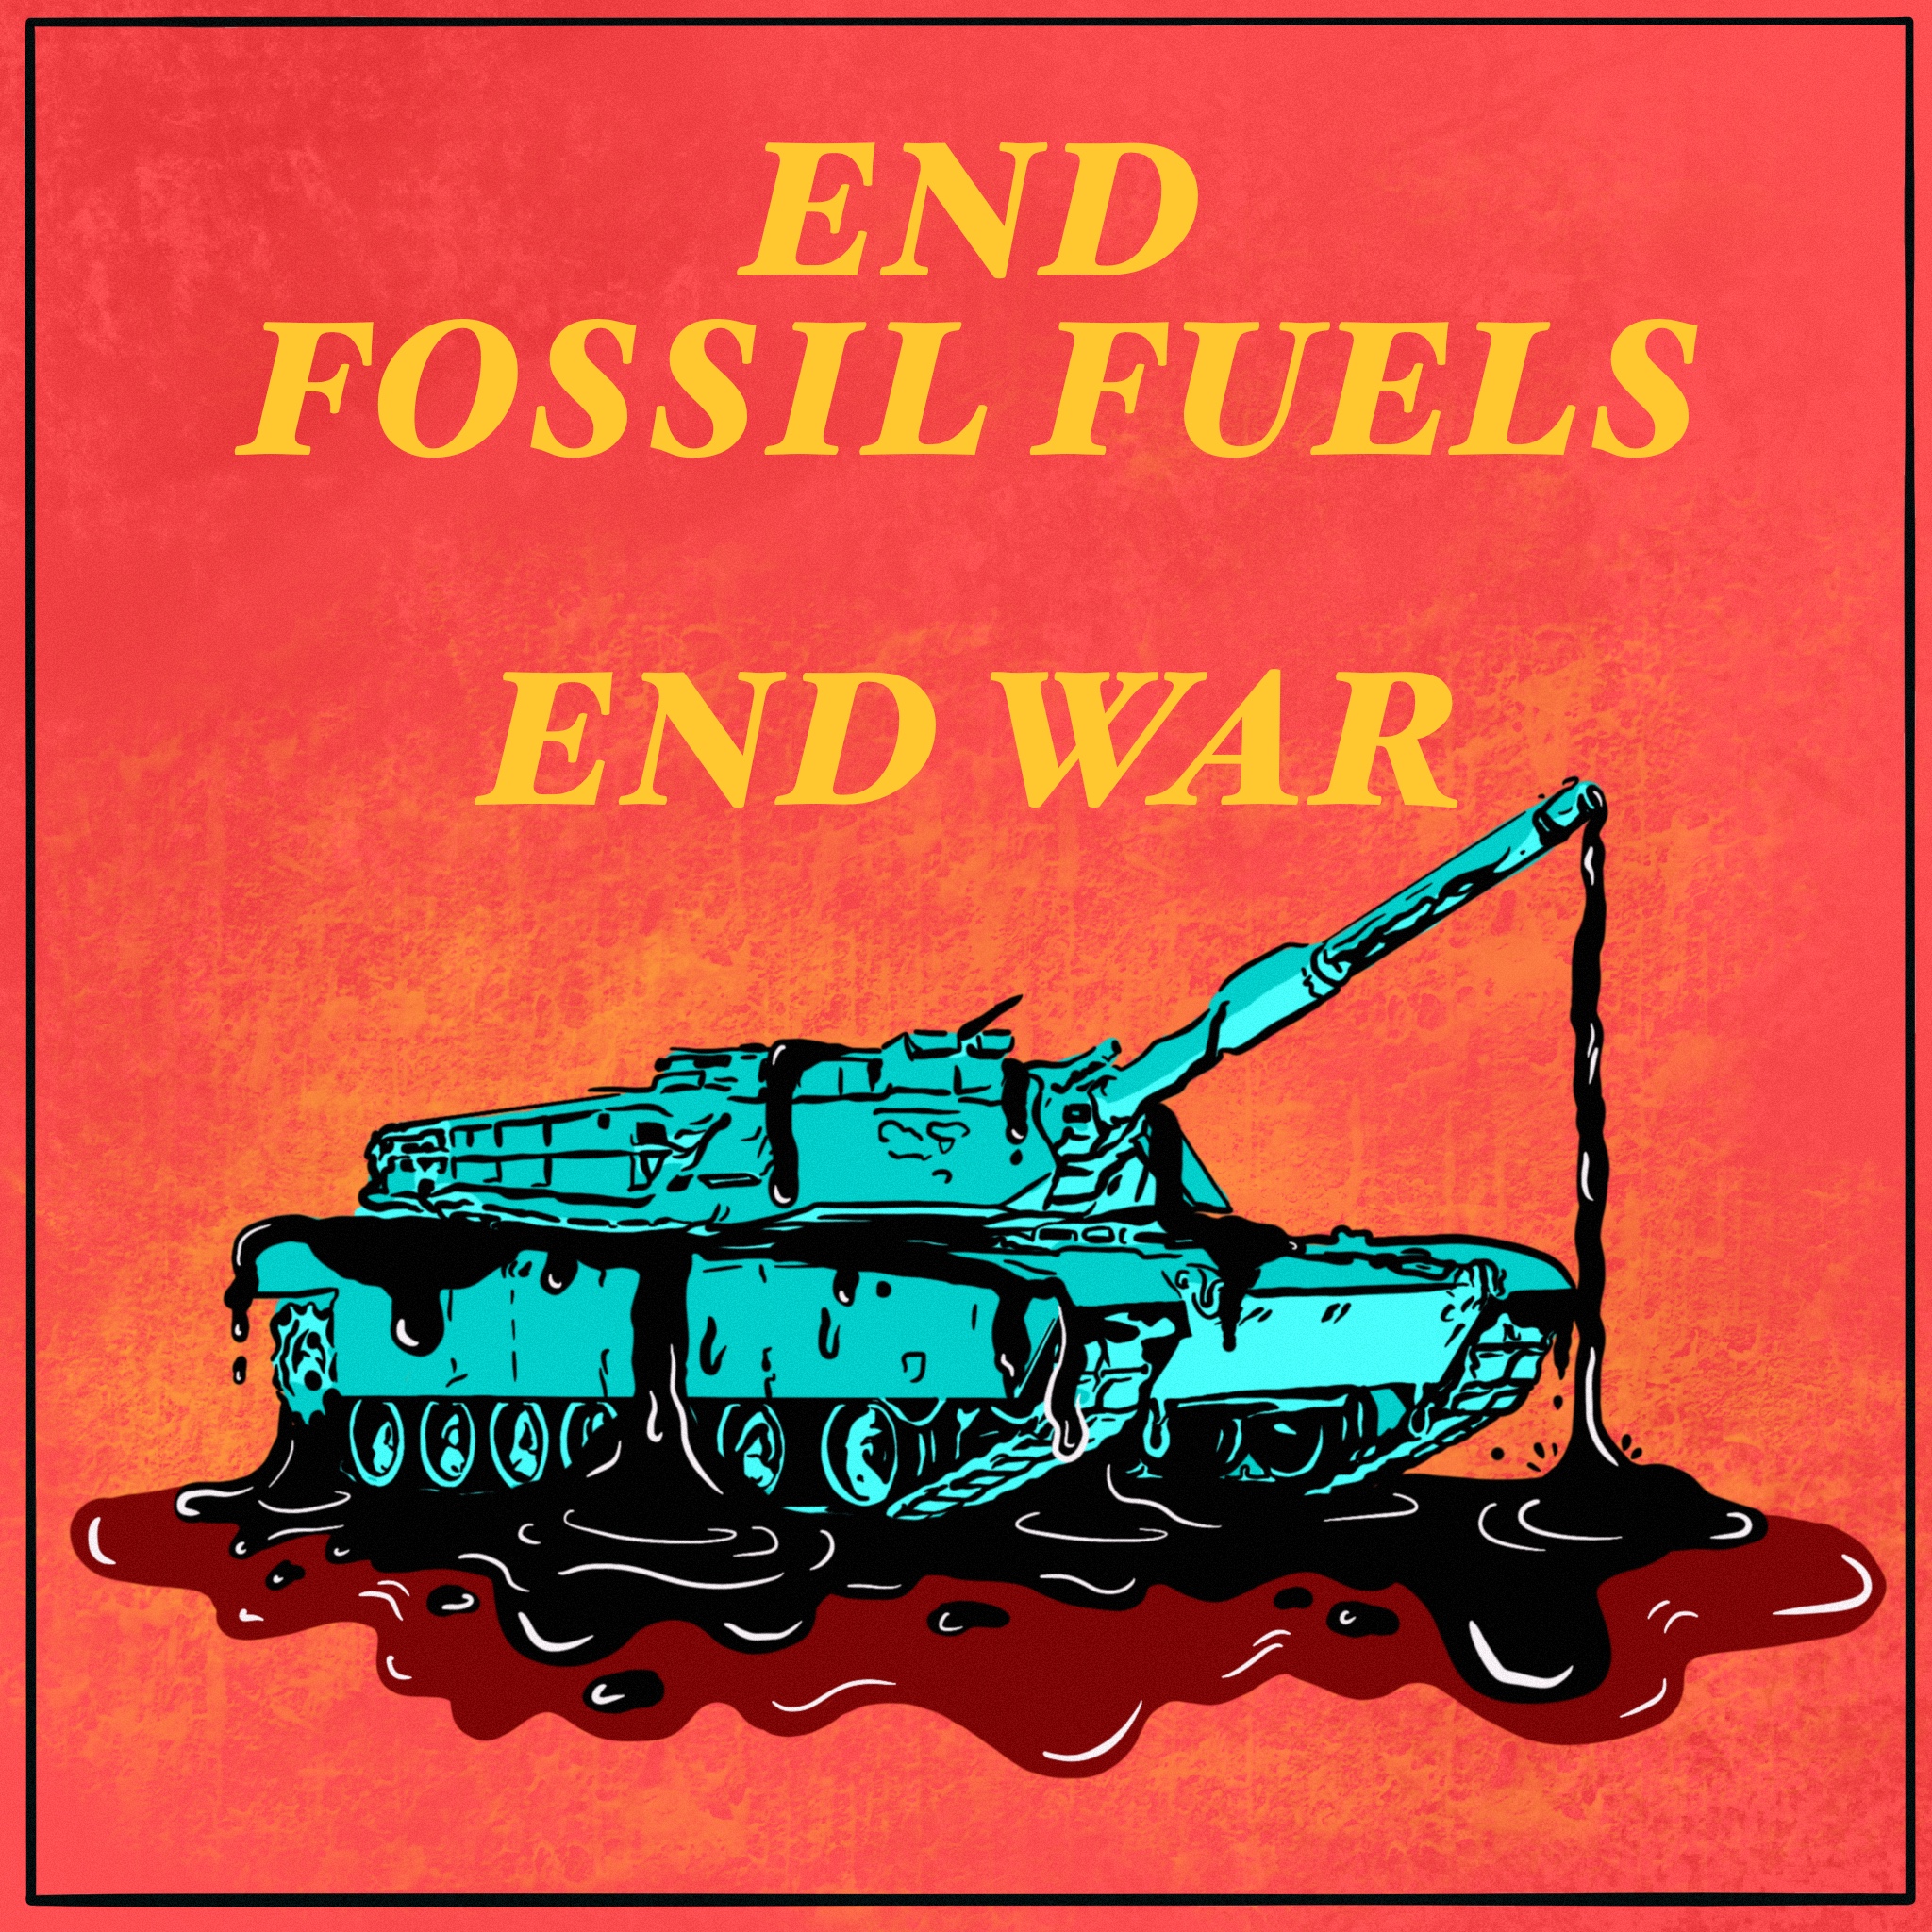 Over 500 Groups Urge Biden to End Fossil Fuel Era in Response to Russia-Ukraine War